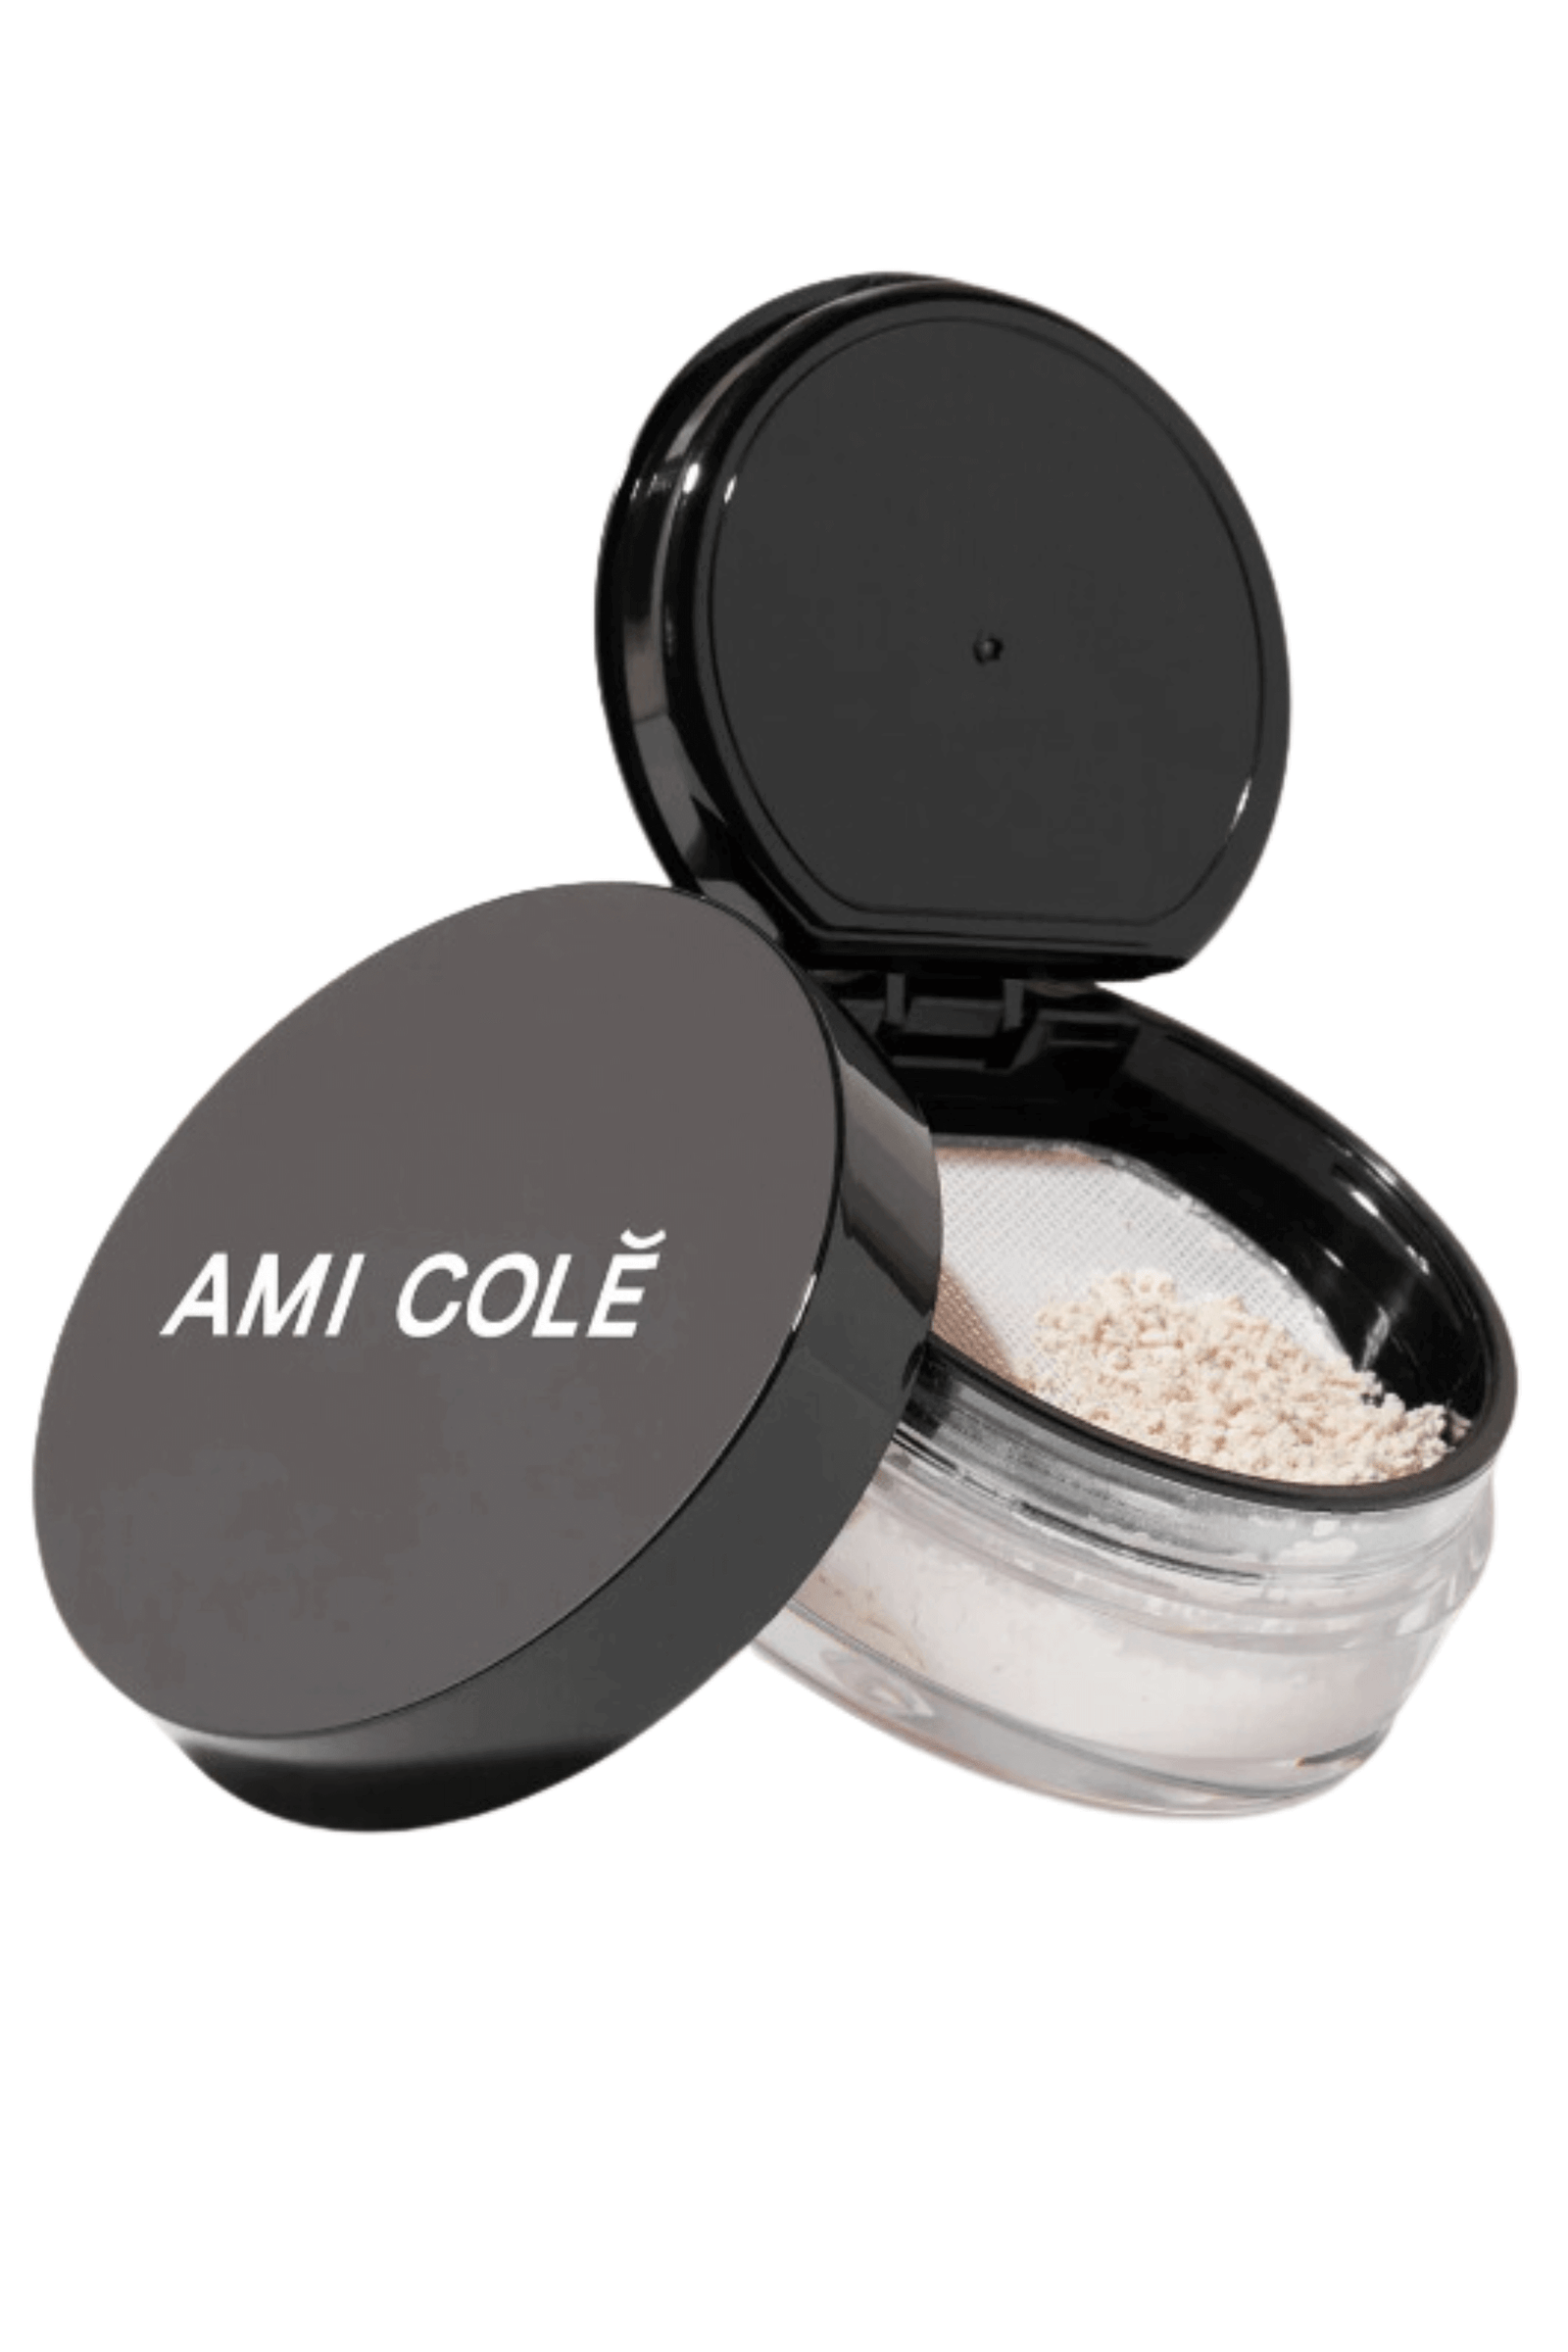 AMI COLE' - Skin Melt Loose Powder